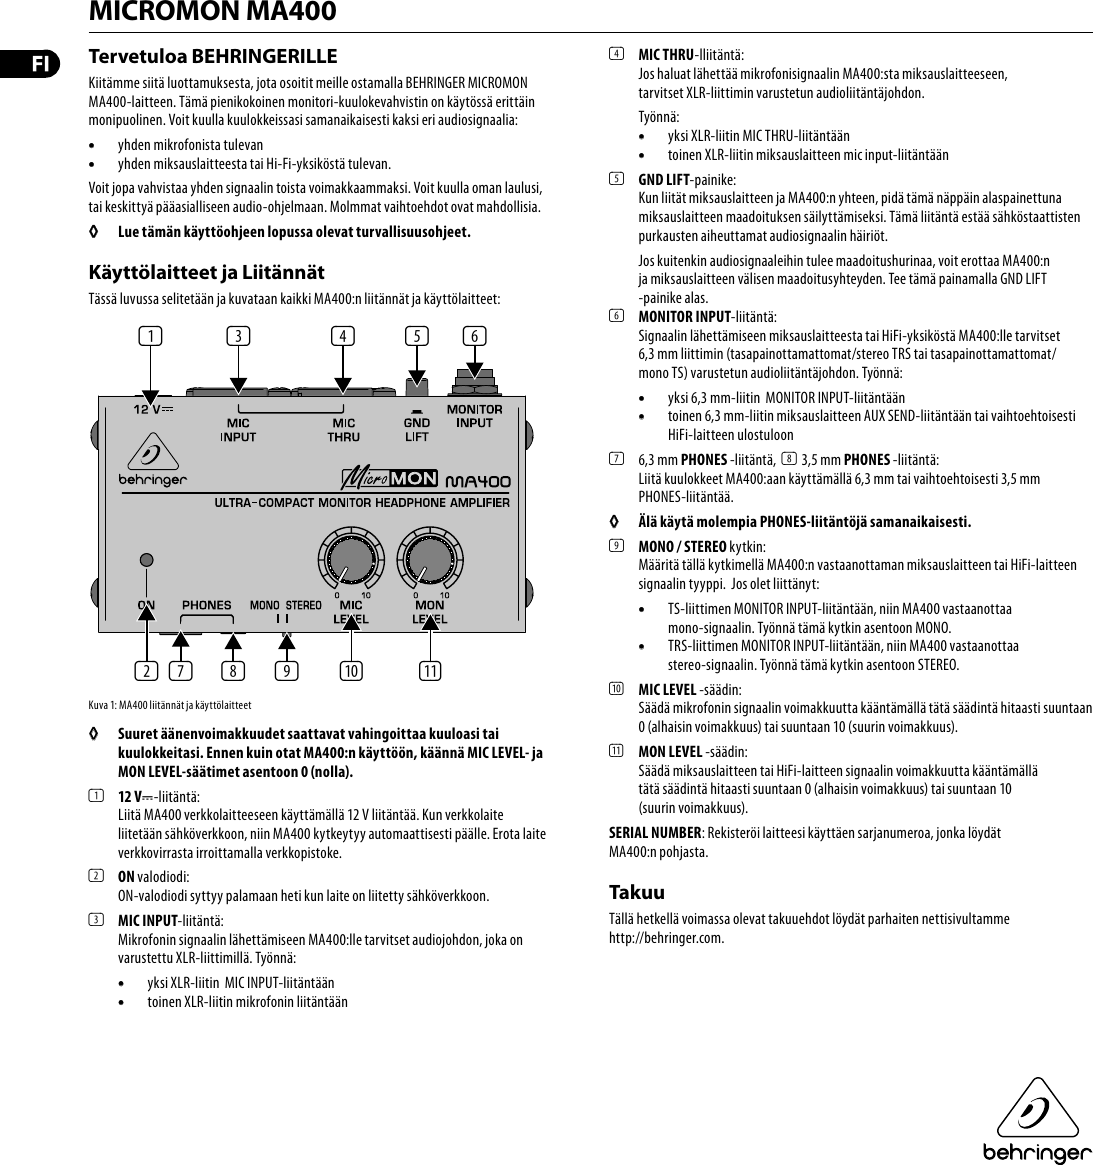 MICROMON MA400 Behringer User Manual (Finnish) M FI